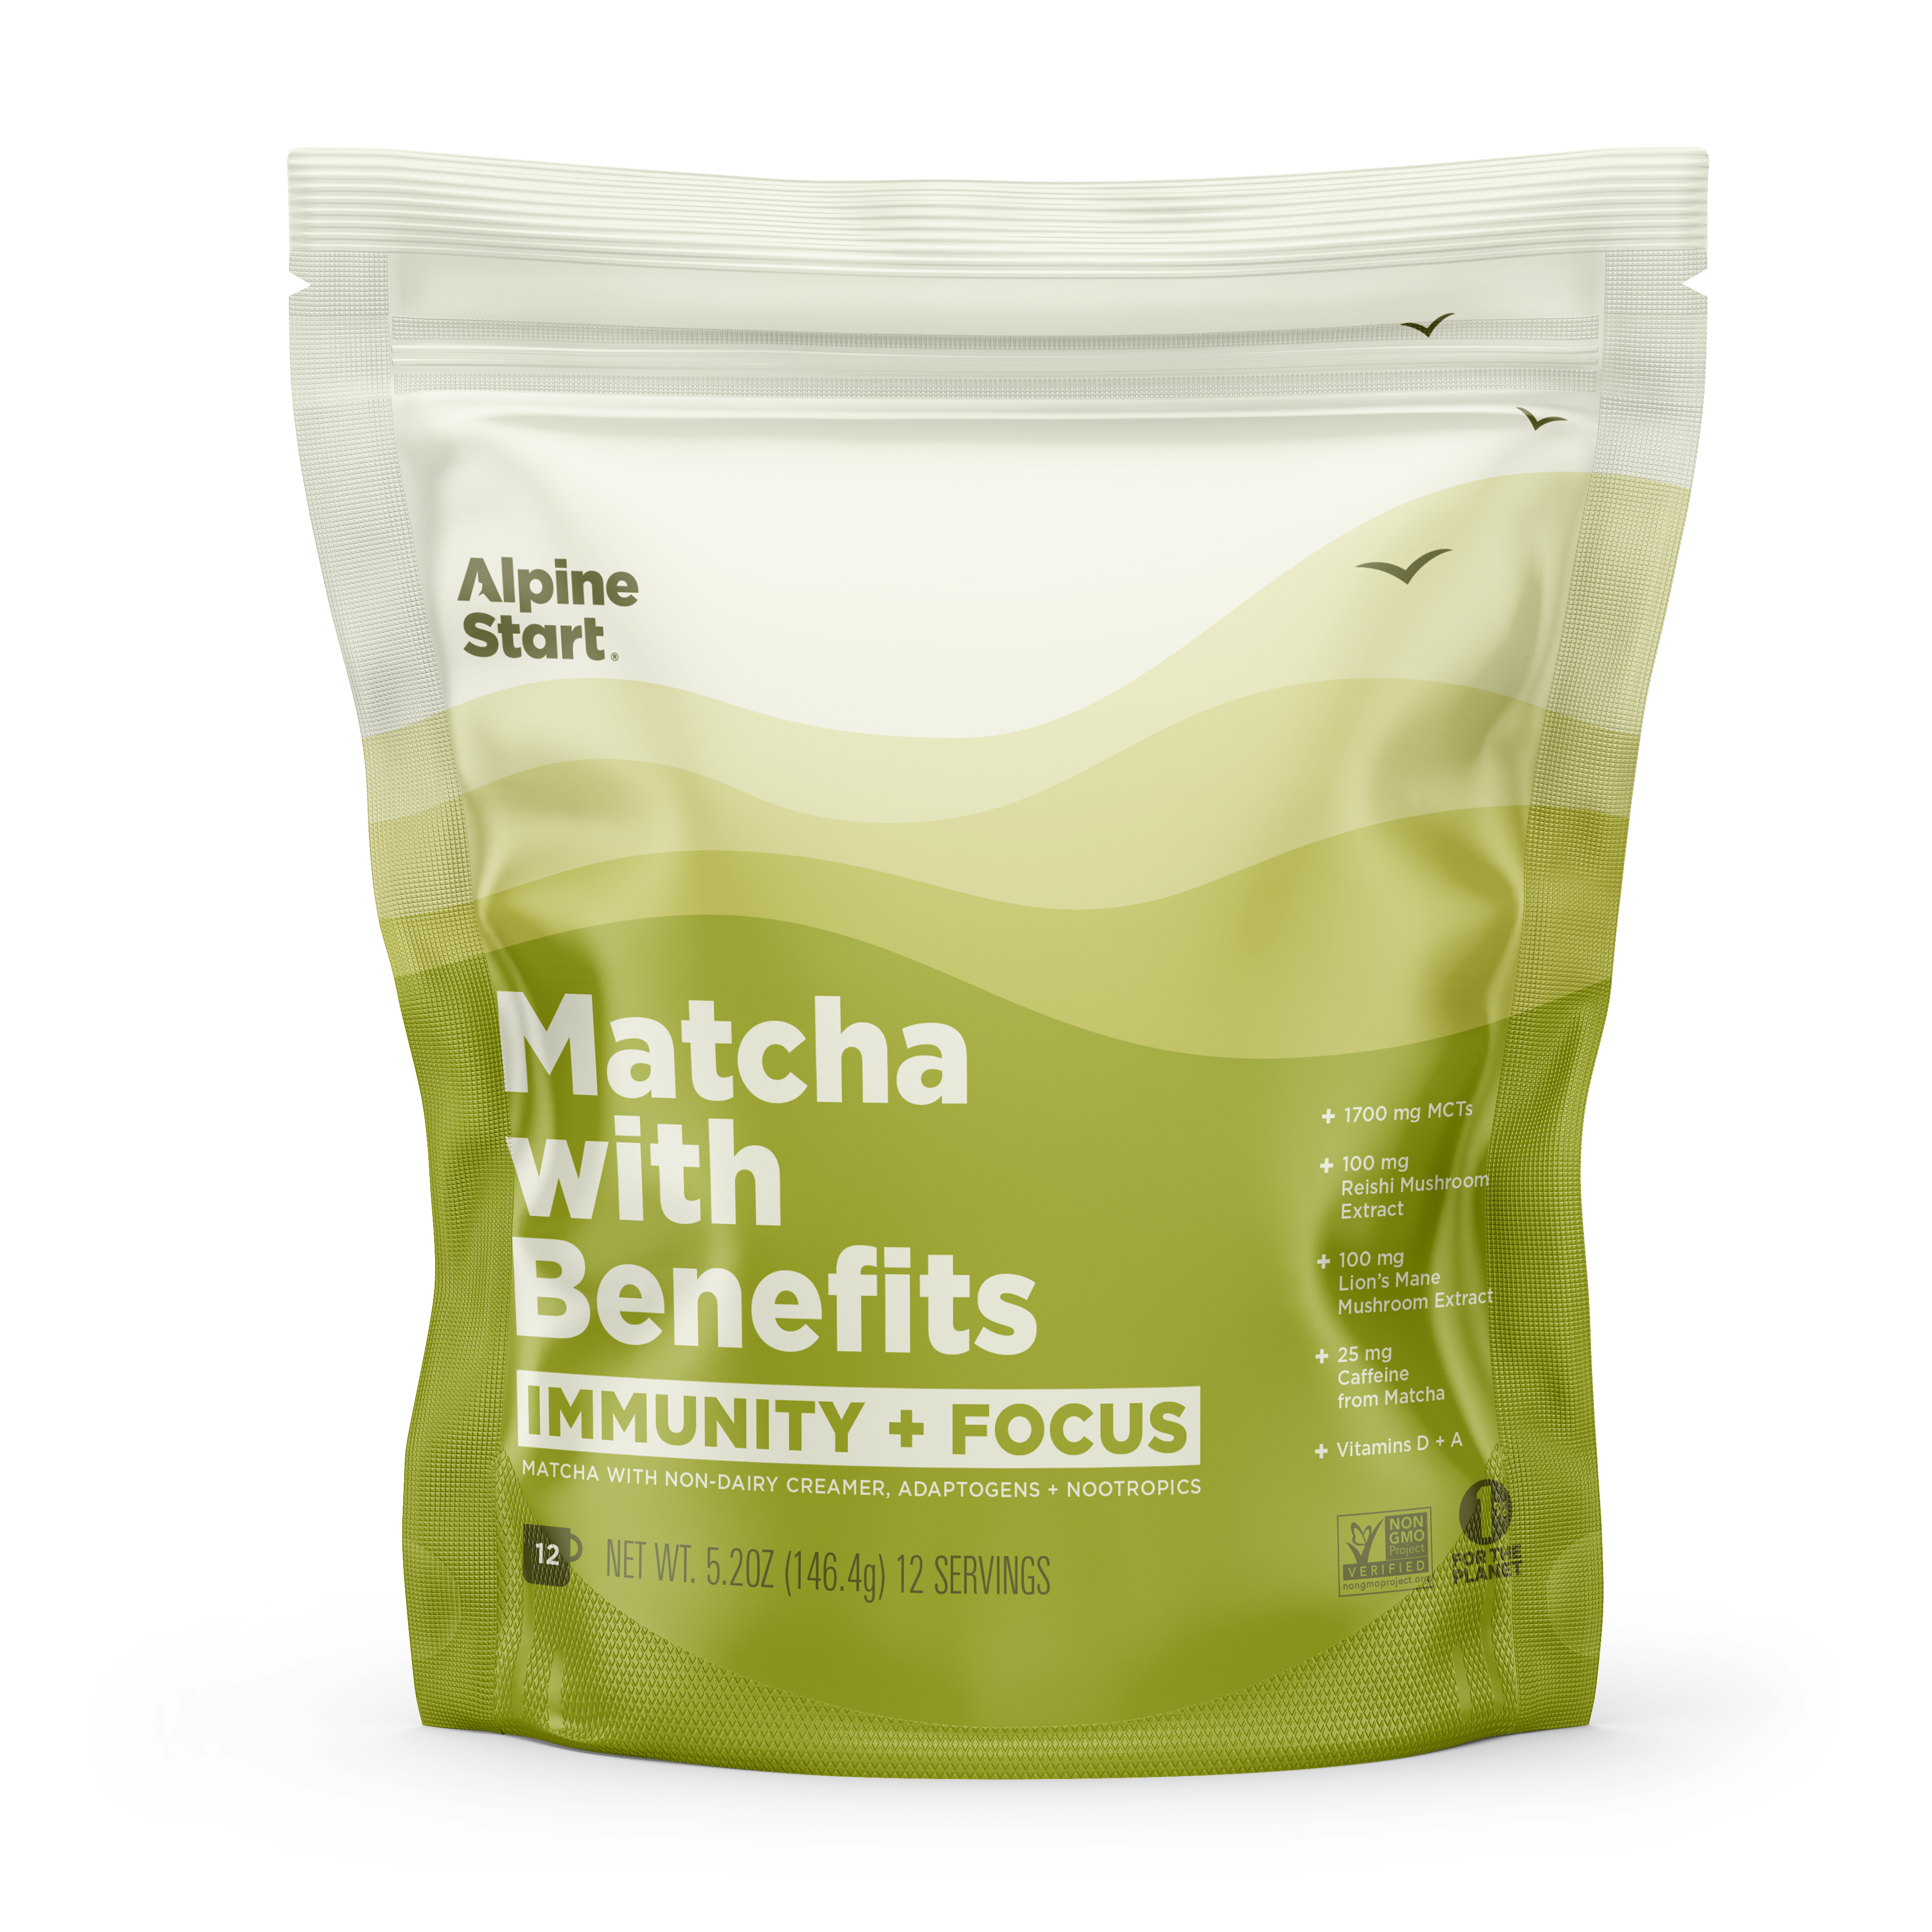 Alpine Start Matcha Immunity + Focus 8 units per case 5.2 oz